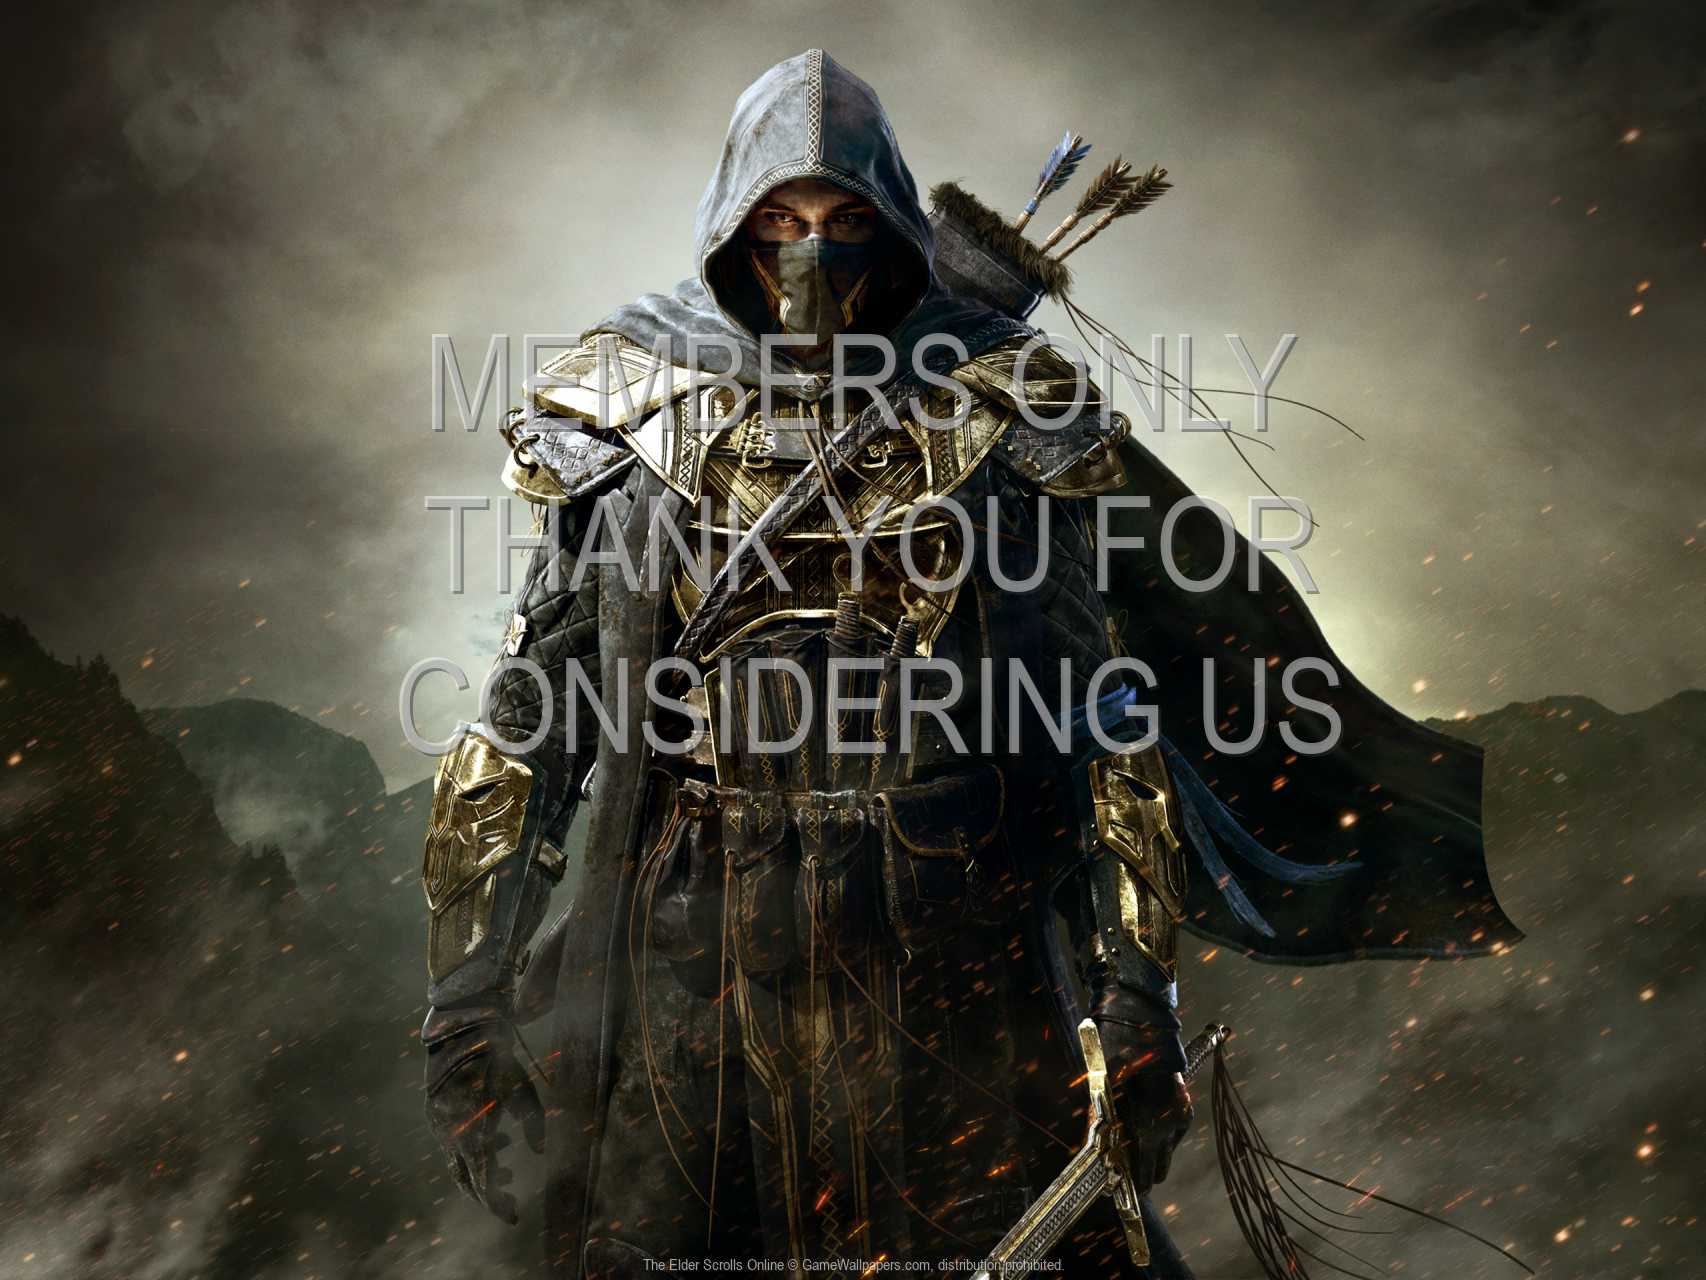 The Elder Scrolls Online 720p%20Horizontal Mobile wallpaper or background 03